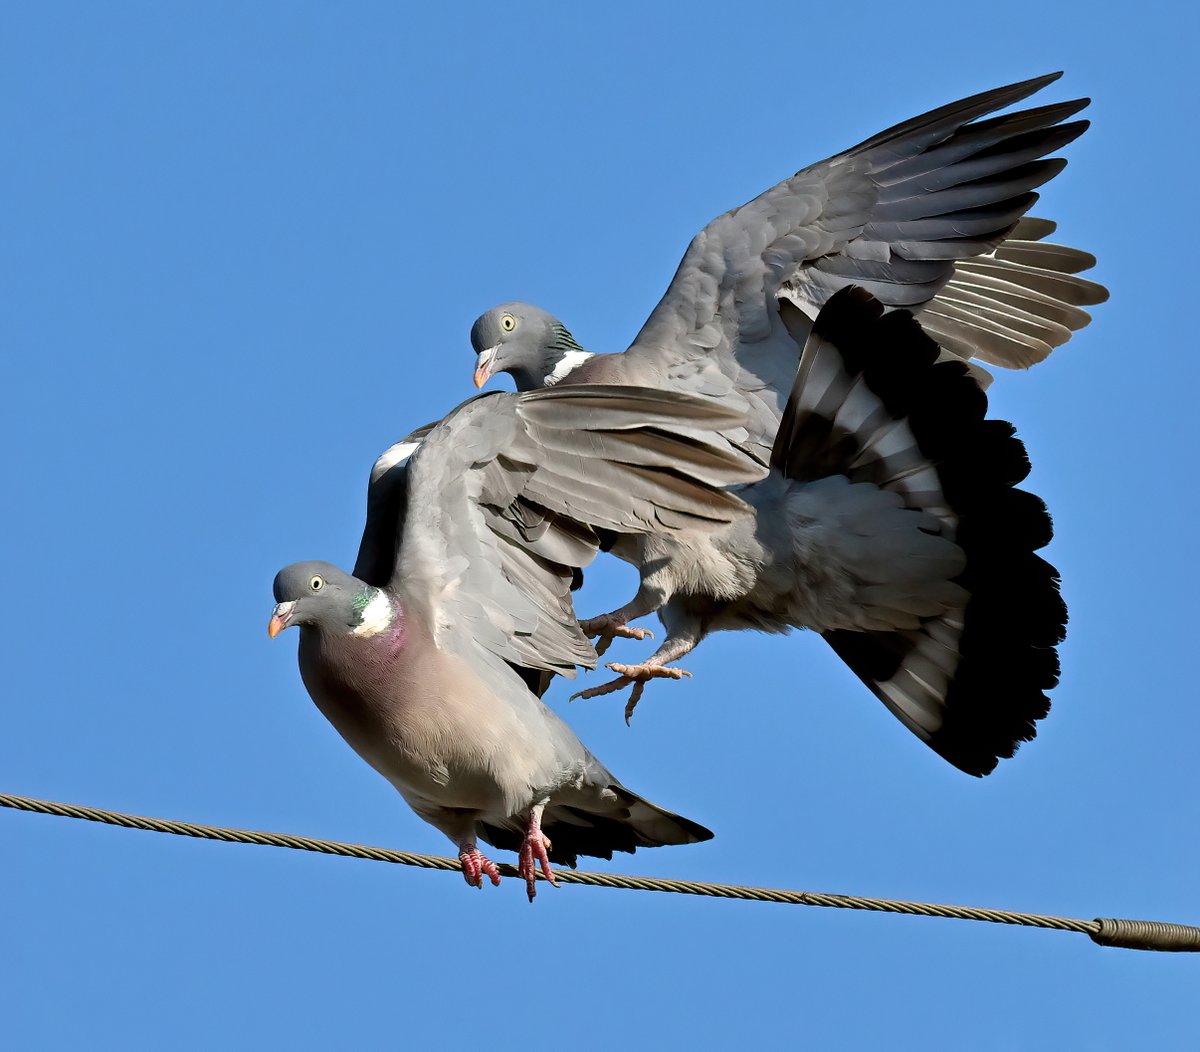 High wire Woodpigeons! 😁 Taken last week in my Somerset village. 🐦